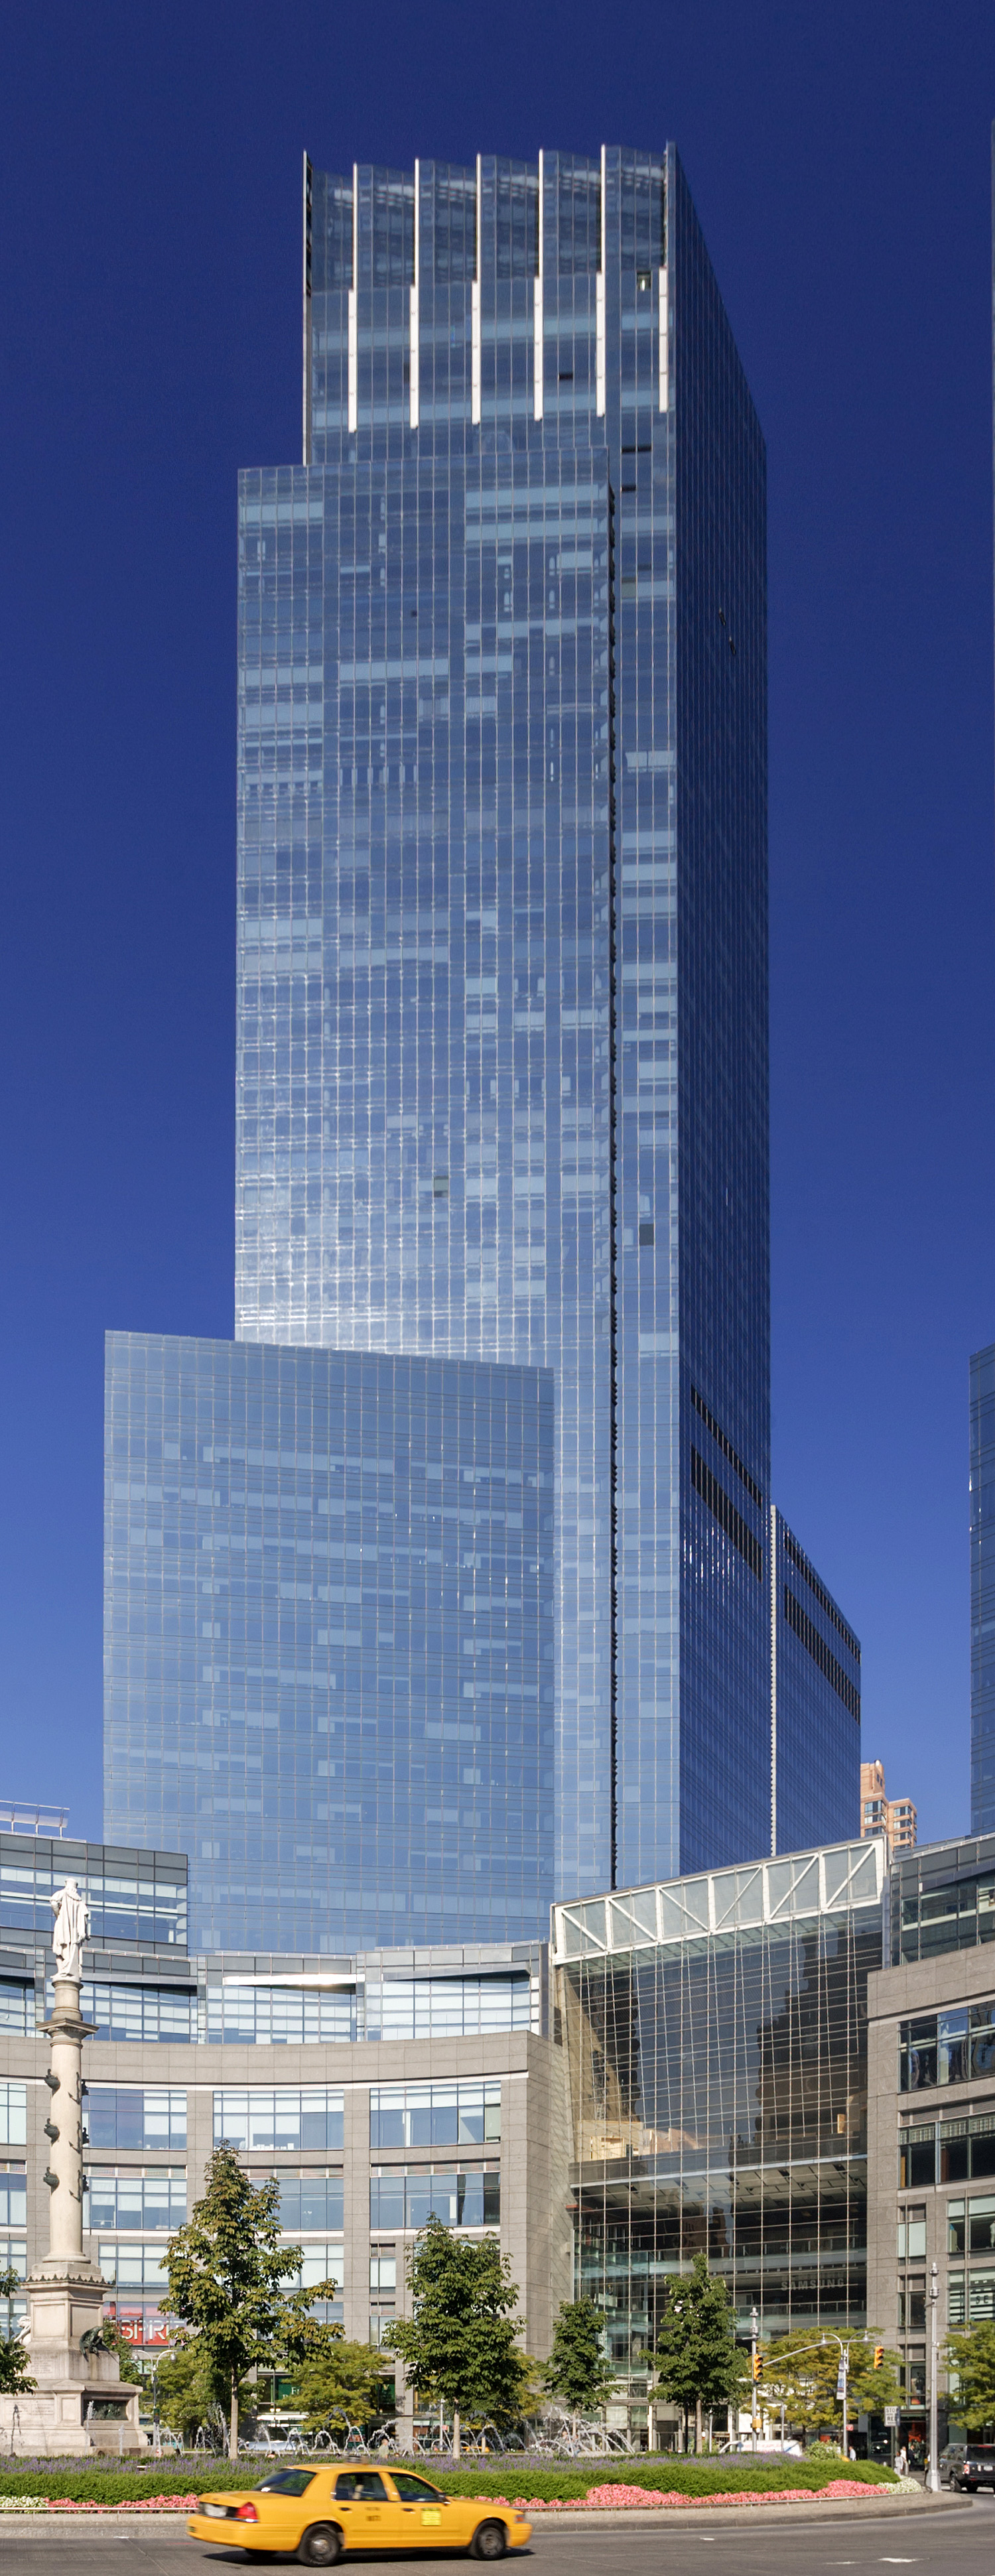 Deutsche Bank Center South Tower, New York City - View from Columbus Circle. © Mathias Beinling